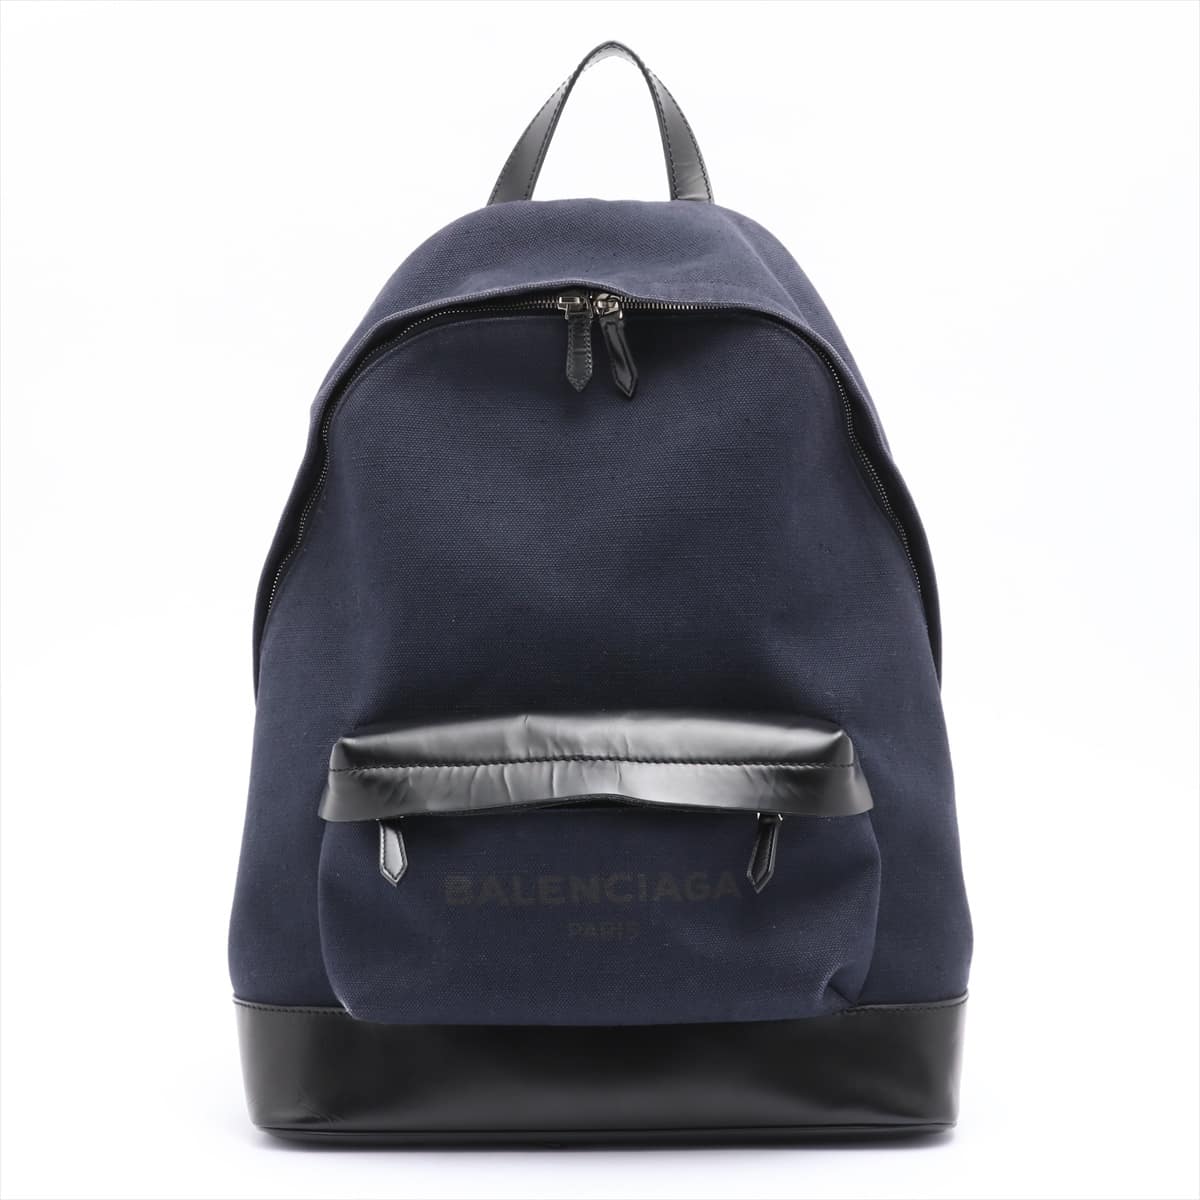 Balenciaga Canvas & leather Backpack Navy blue 392007